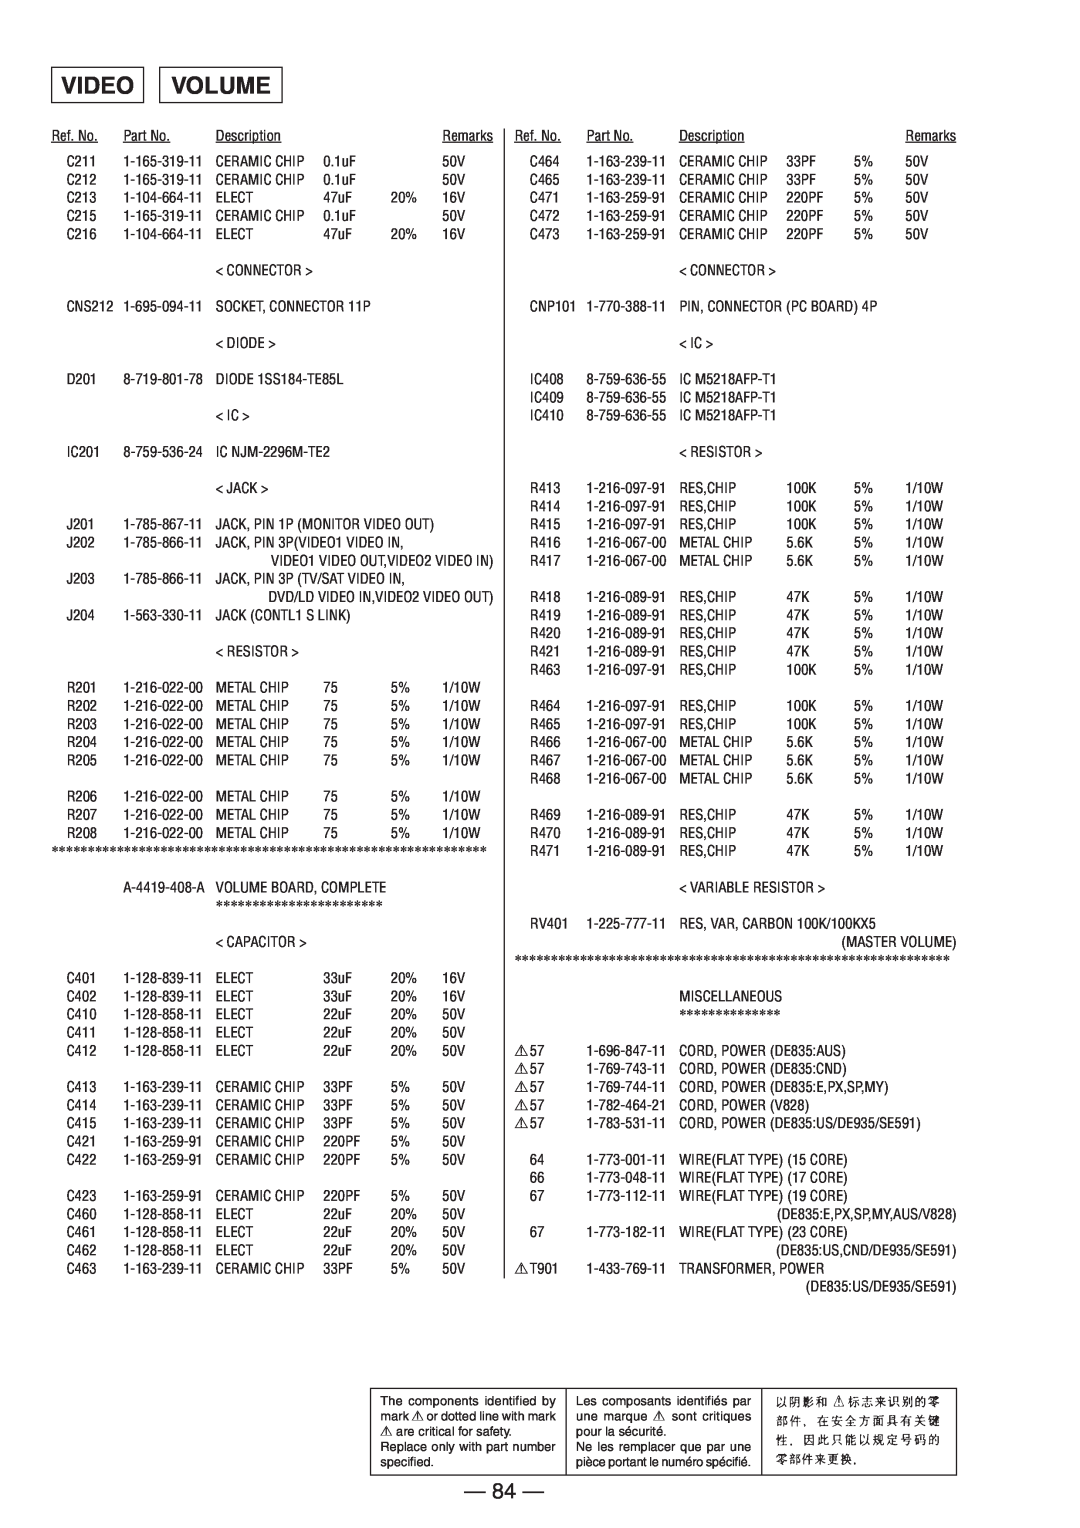 Sony STR-DE835 specifications Volume, 84, Video 